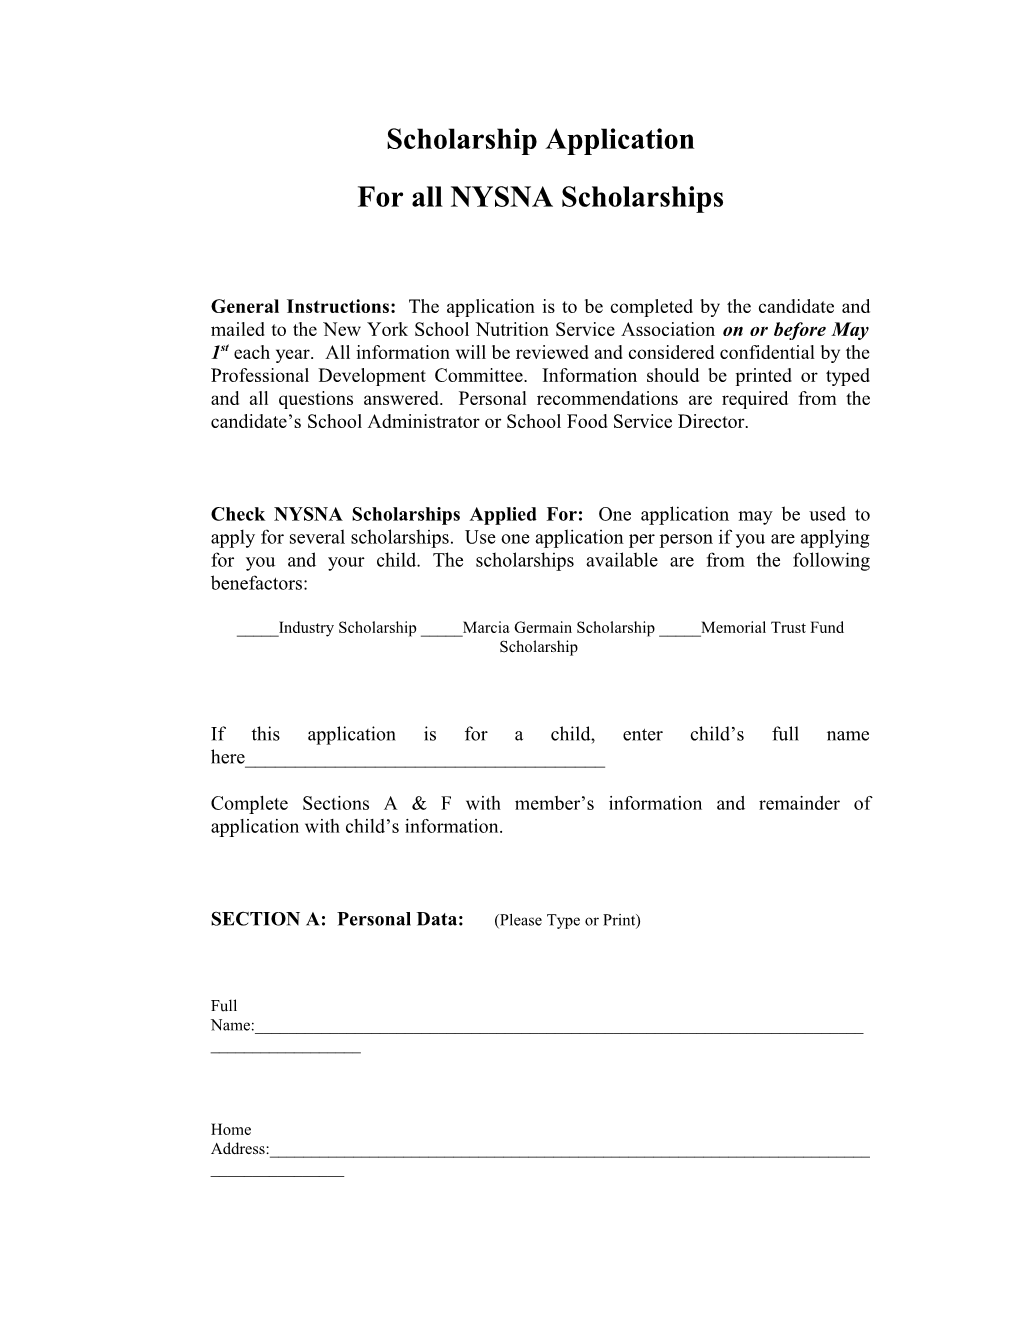 For All NYSNA Scholarships